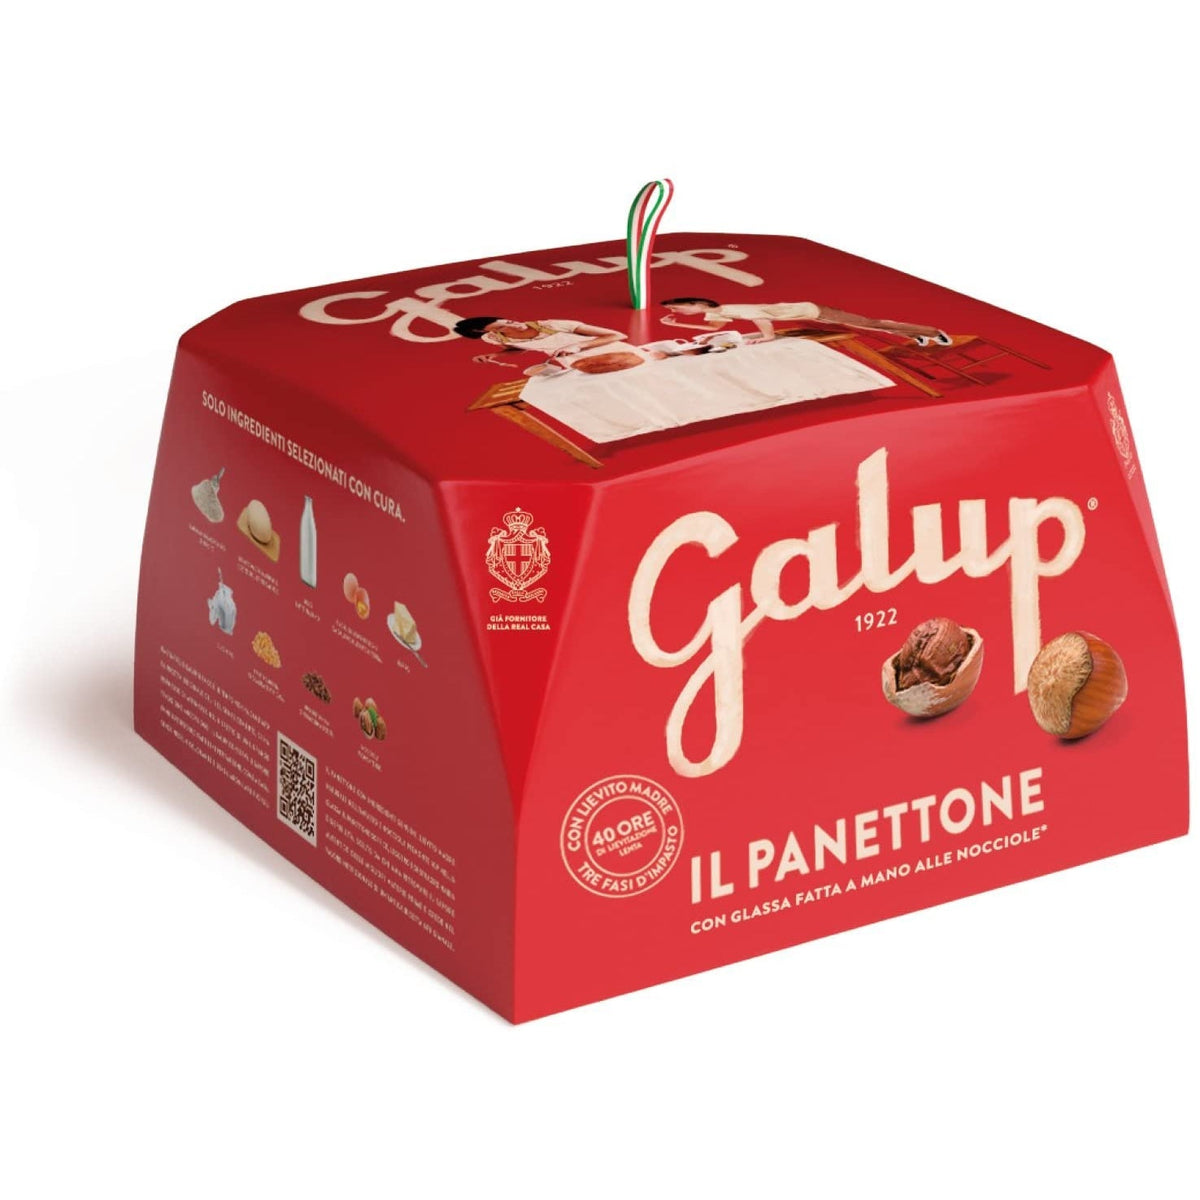 Galup Italian Traditional Panettone 750g - gift box